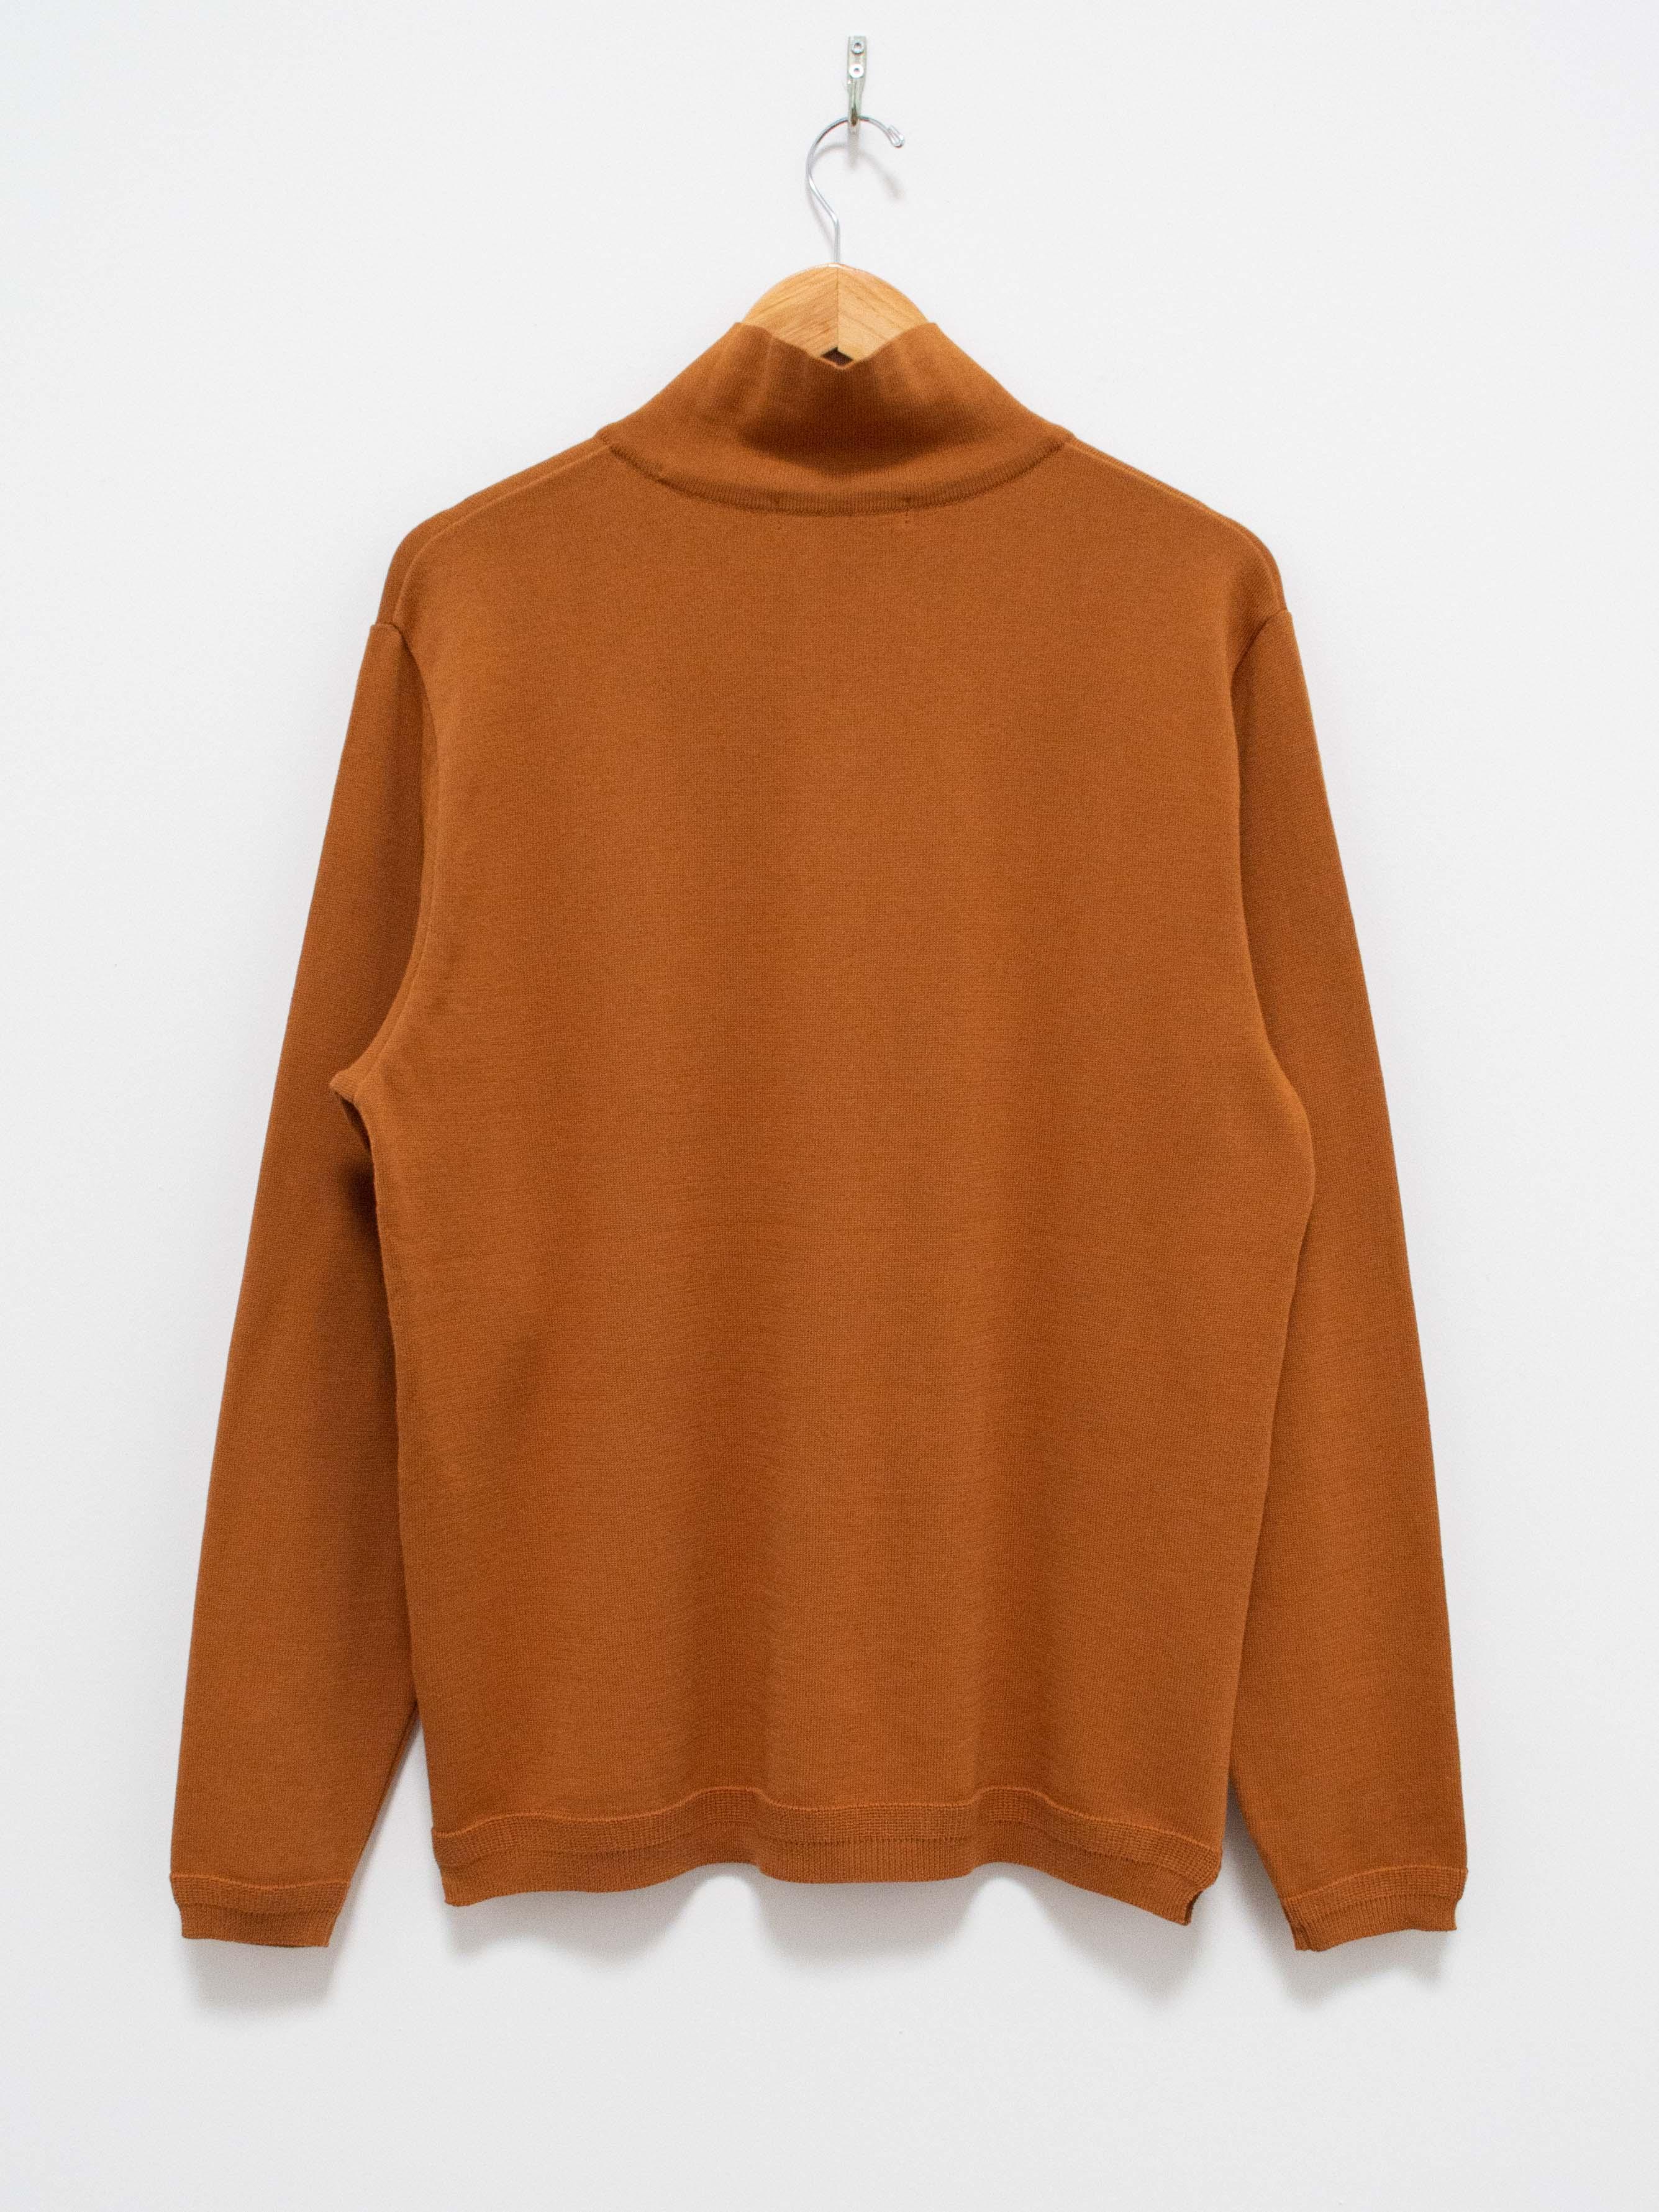 Namu Shop - Fujito Turtleneck Knit Shirt - Brown Gold